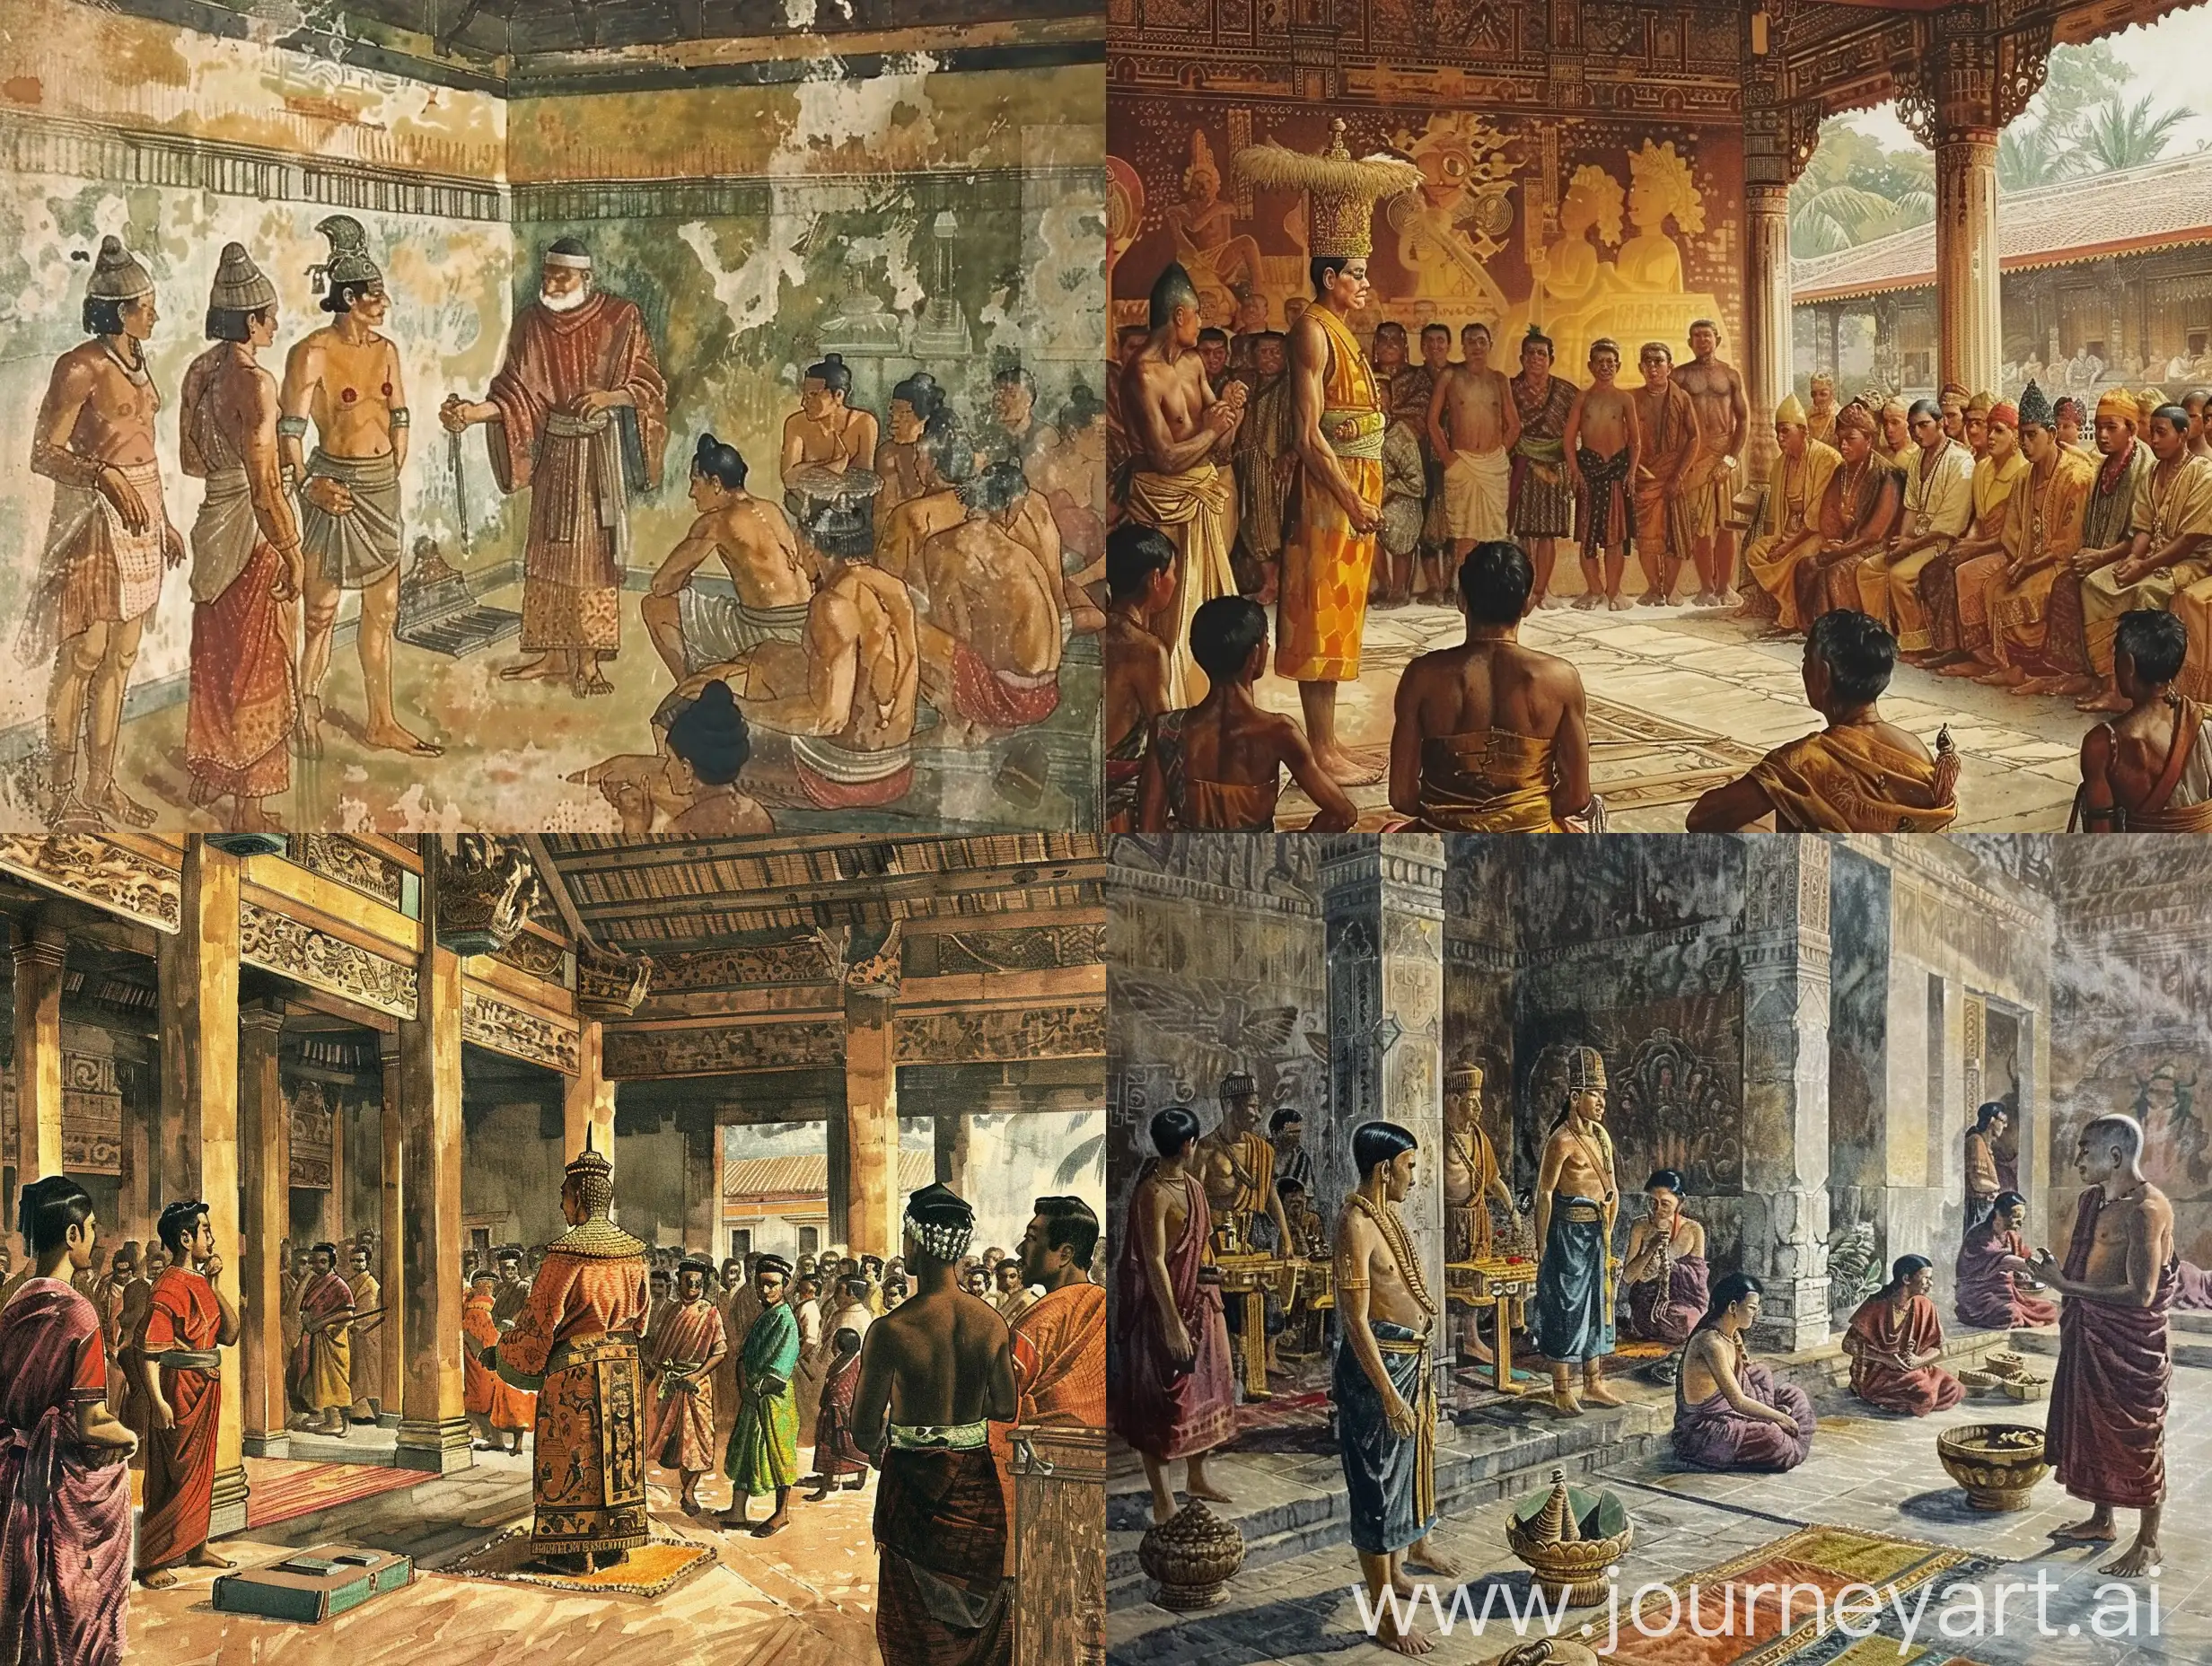 Majapahit-Kingdom-Royal-Gathering-in-1200s-Vibrant-Cultural-Heritage